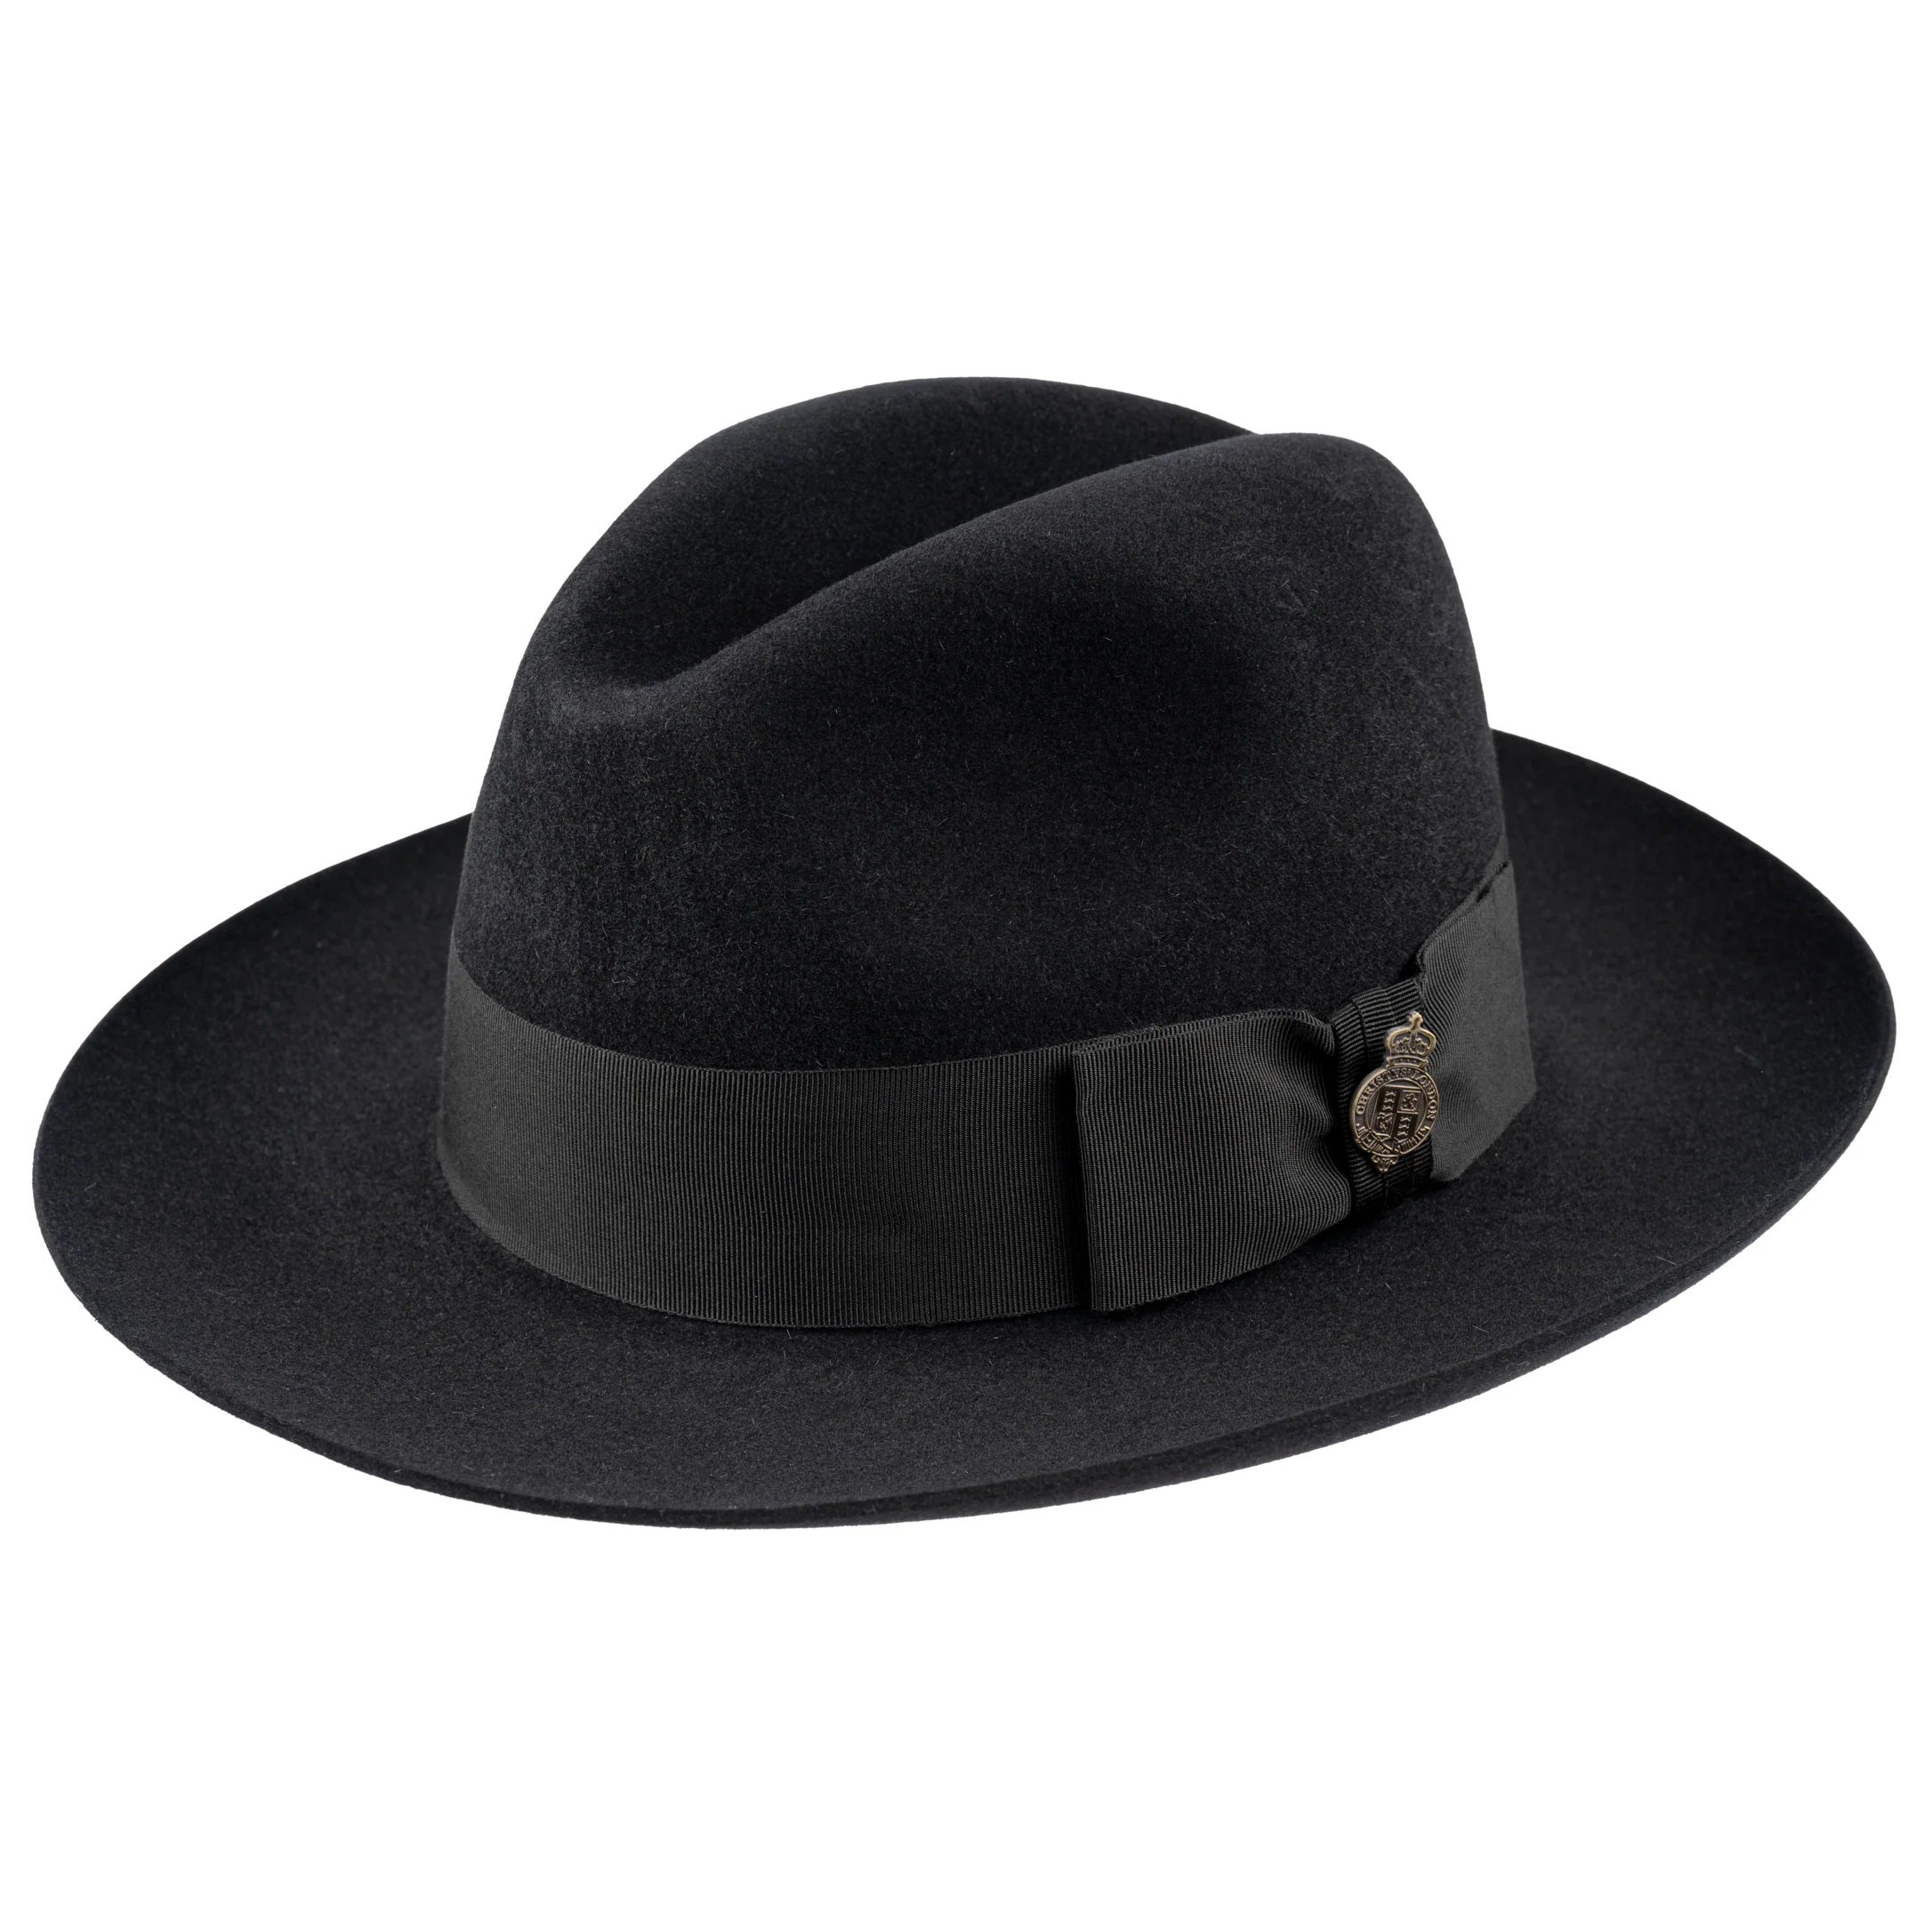 CHRISTYS' Classic Fur Felt Fedora Hat - Black